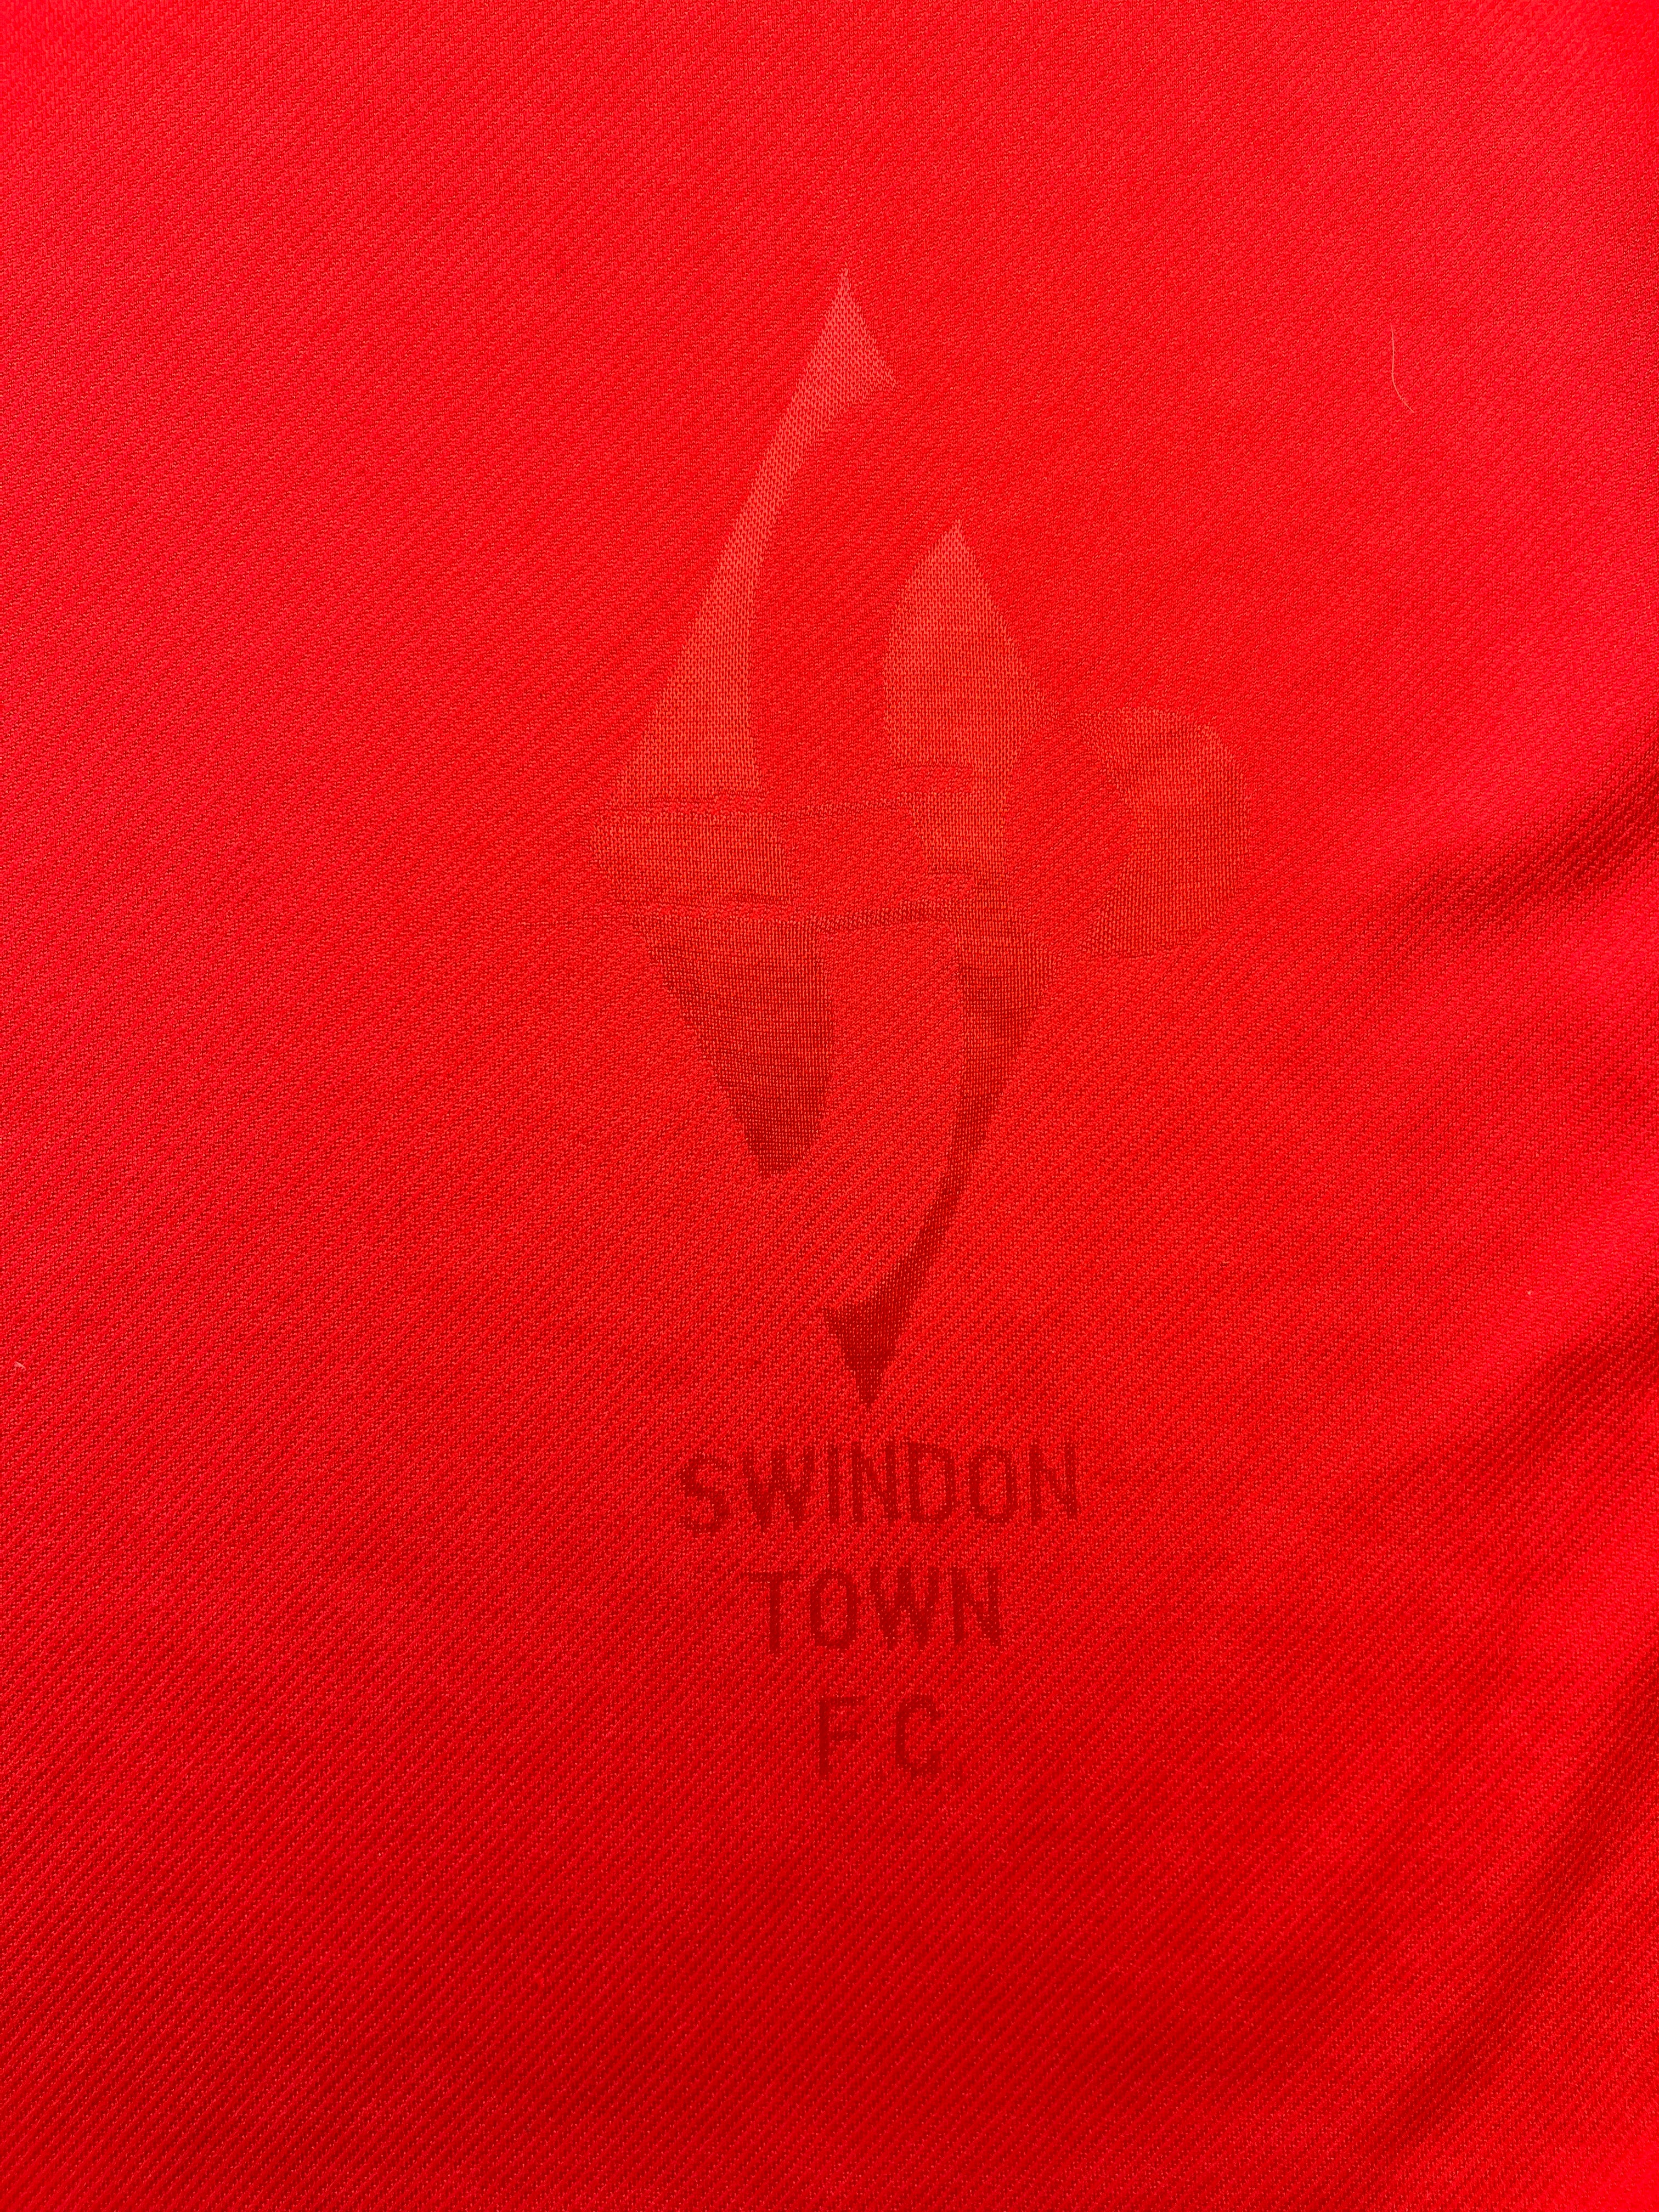 1995/97 Swindon Town Home Shirt (XL) 9/10